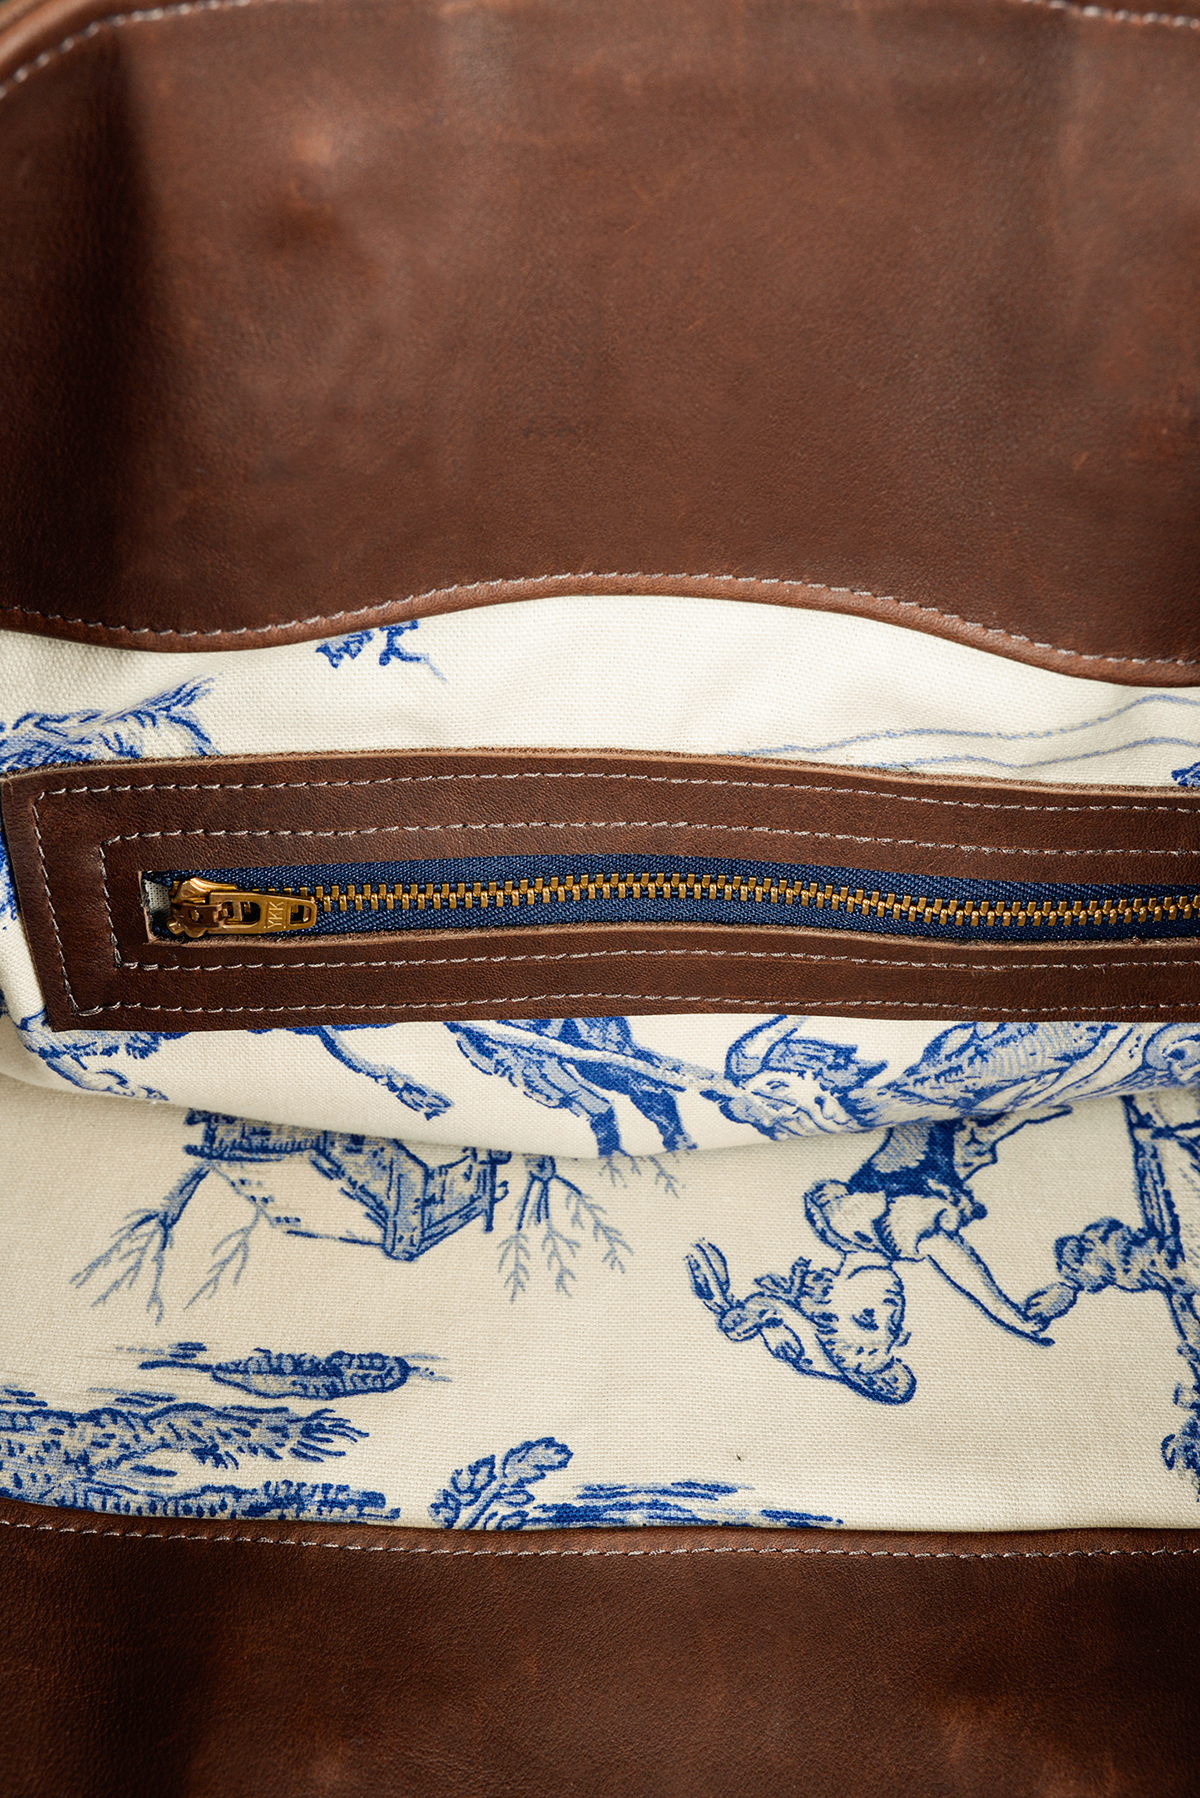 accessories handbag handbags handmade Tote leather